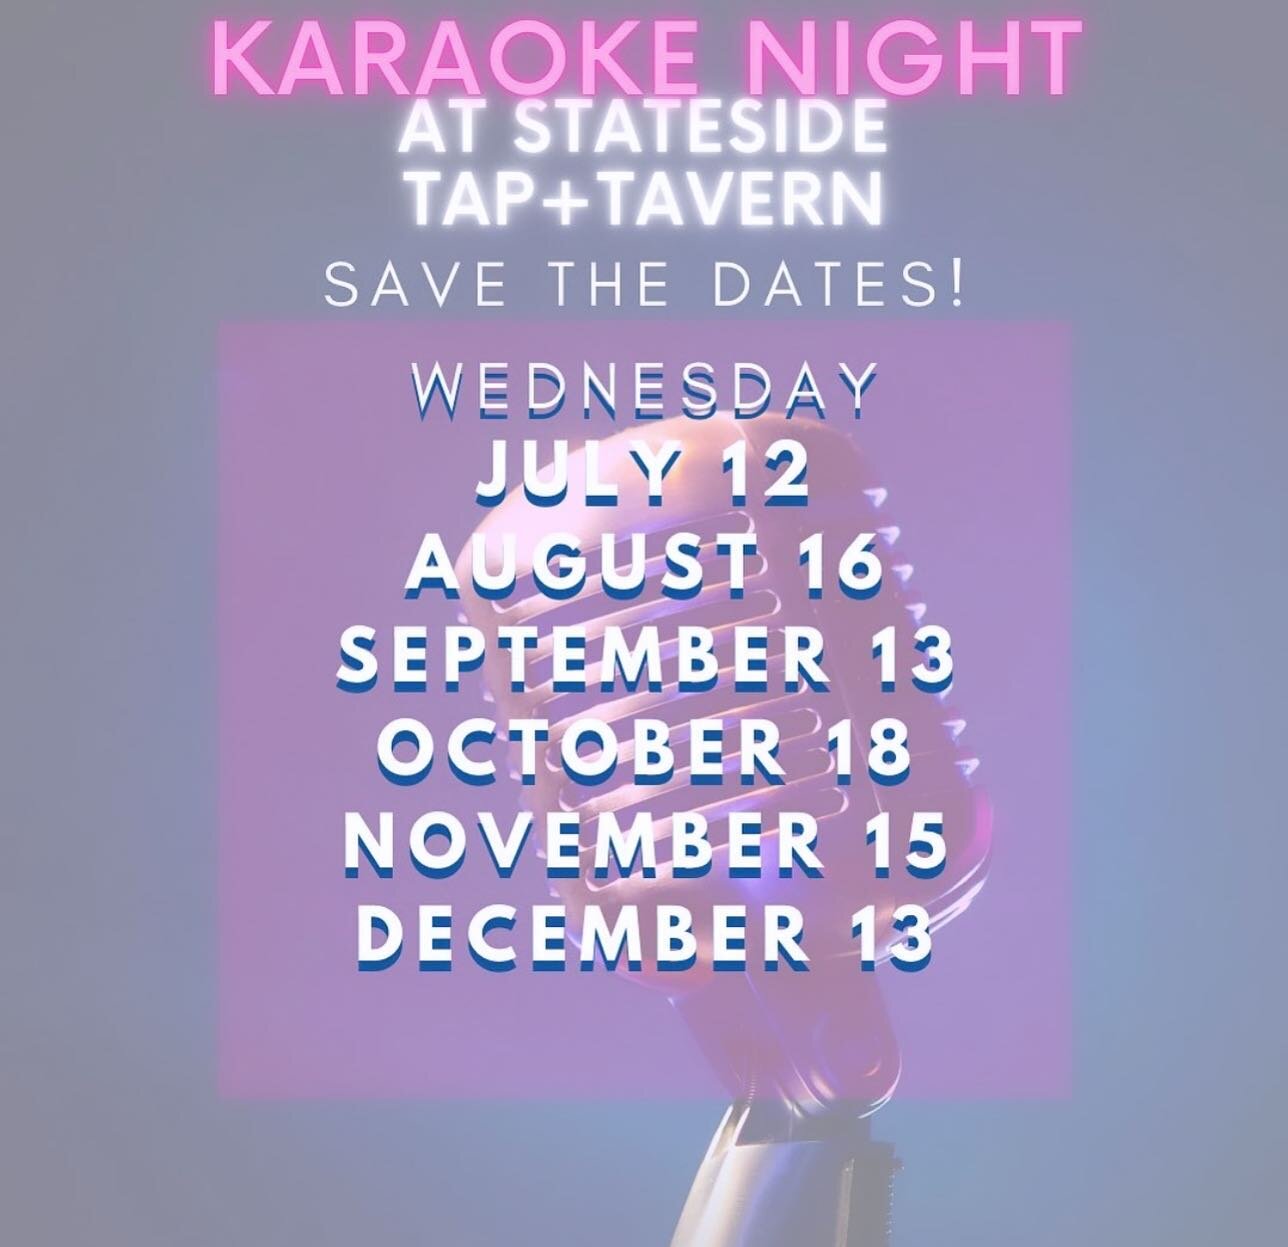 Join Us Wednesday Night for Karaoke!!!